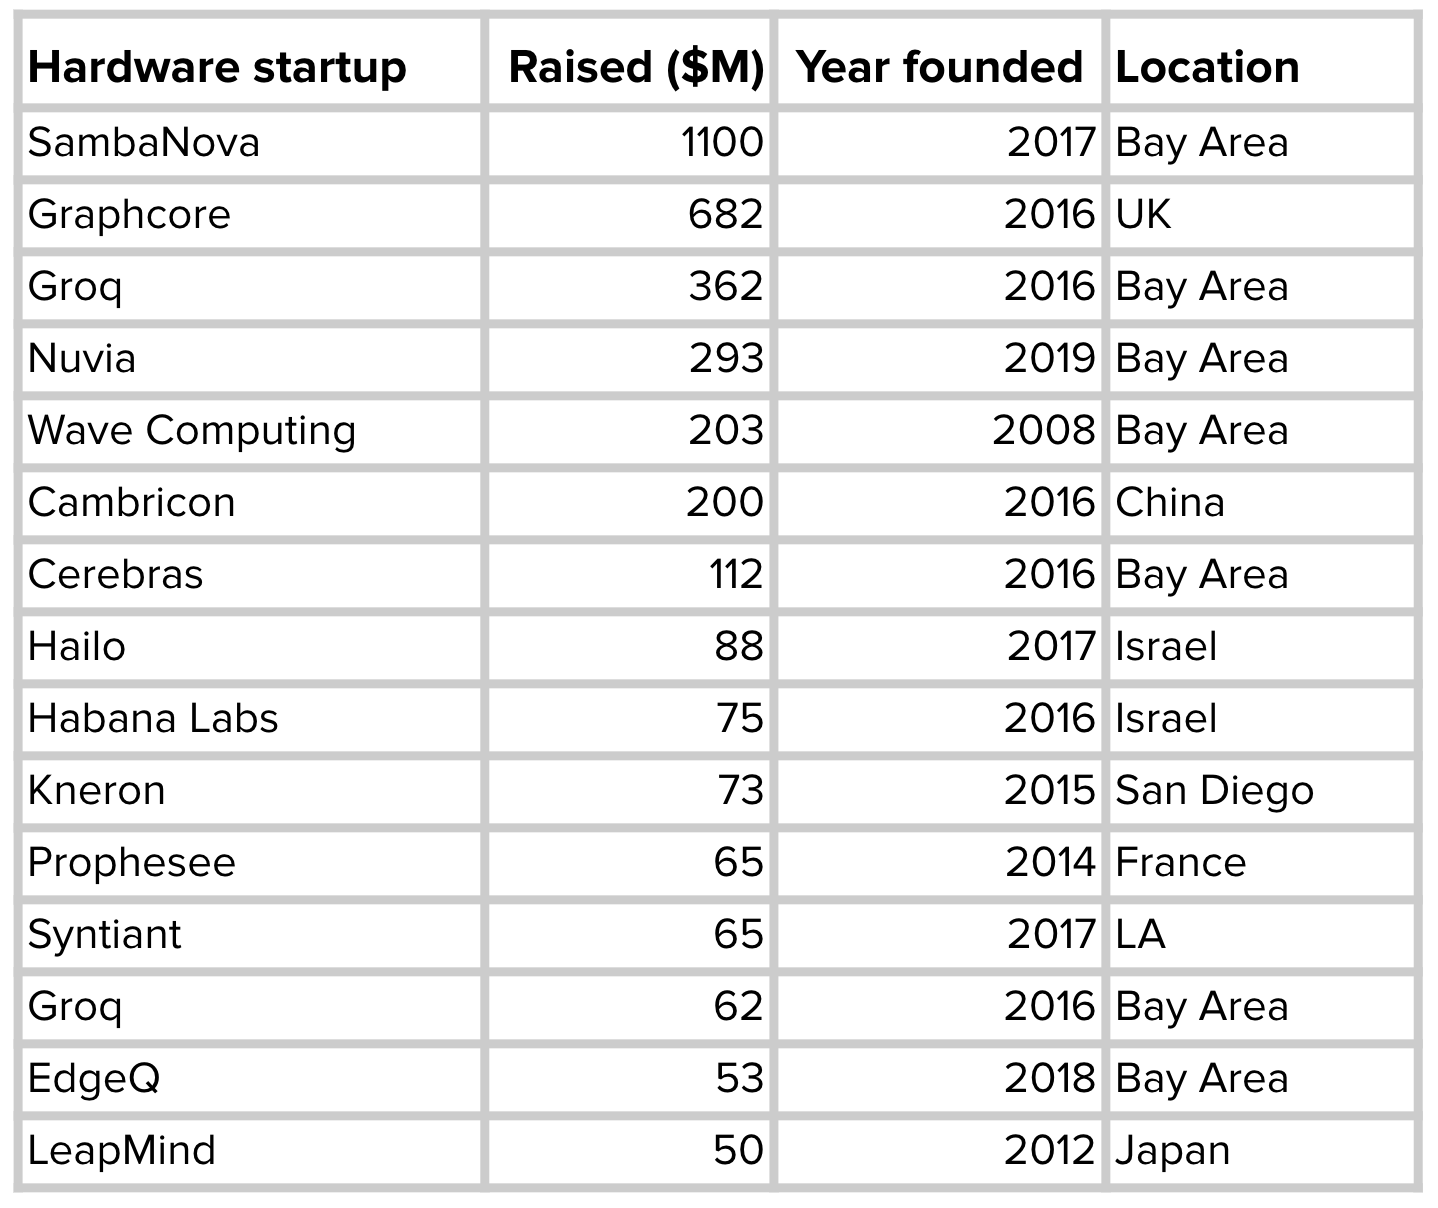 MLOps hardware startups that raised money in 2020